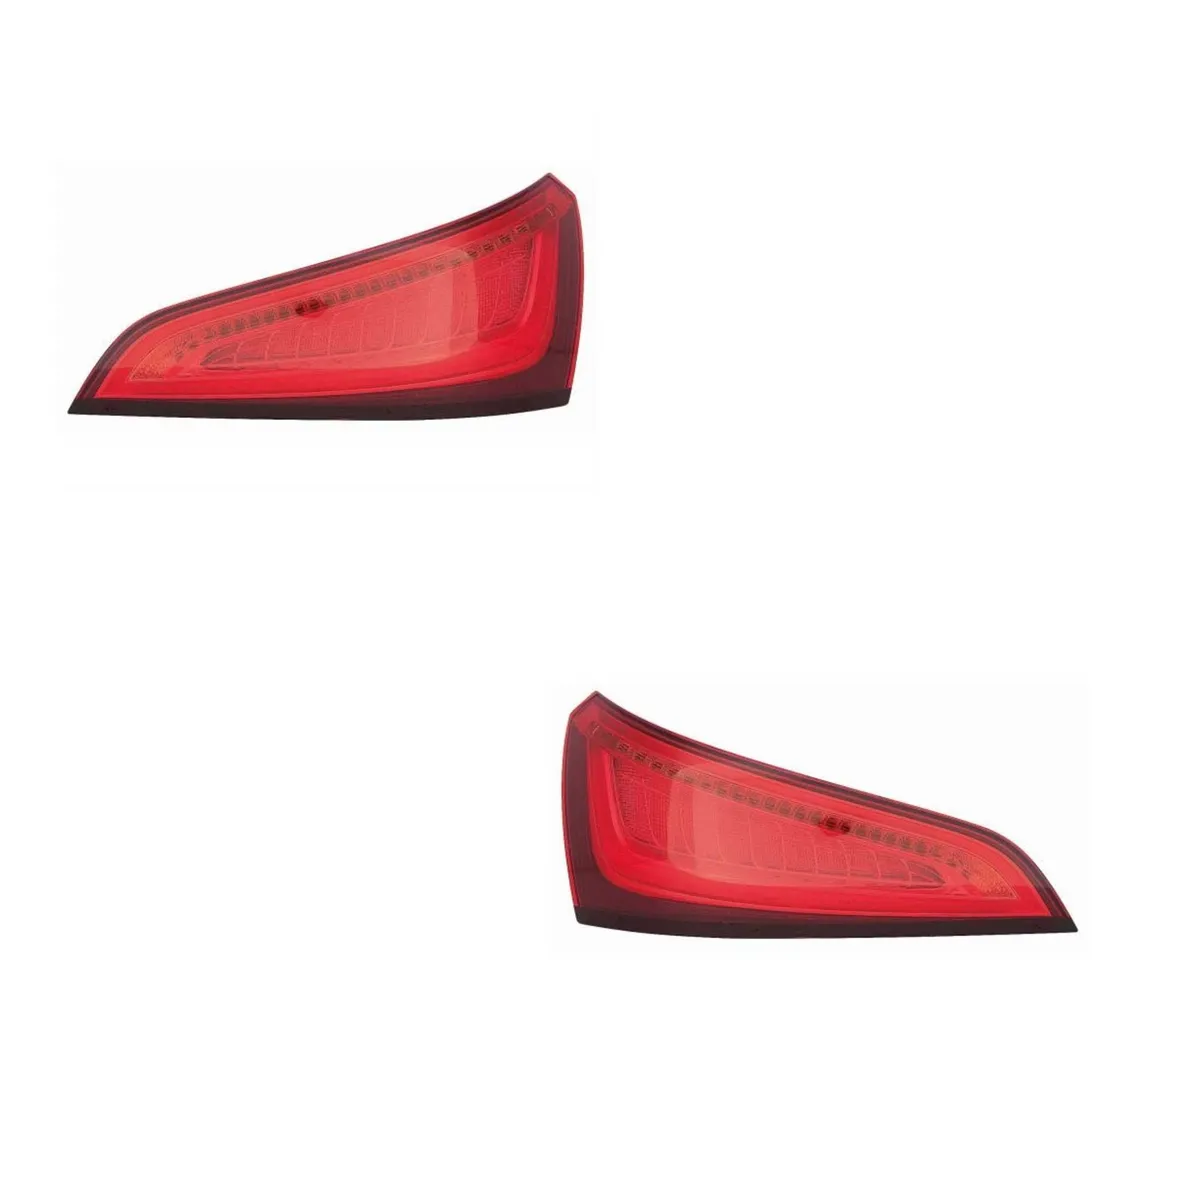 LED Rückleuchten Heckleuchten Set links rechts mit Lampenträger für Audi Q5